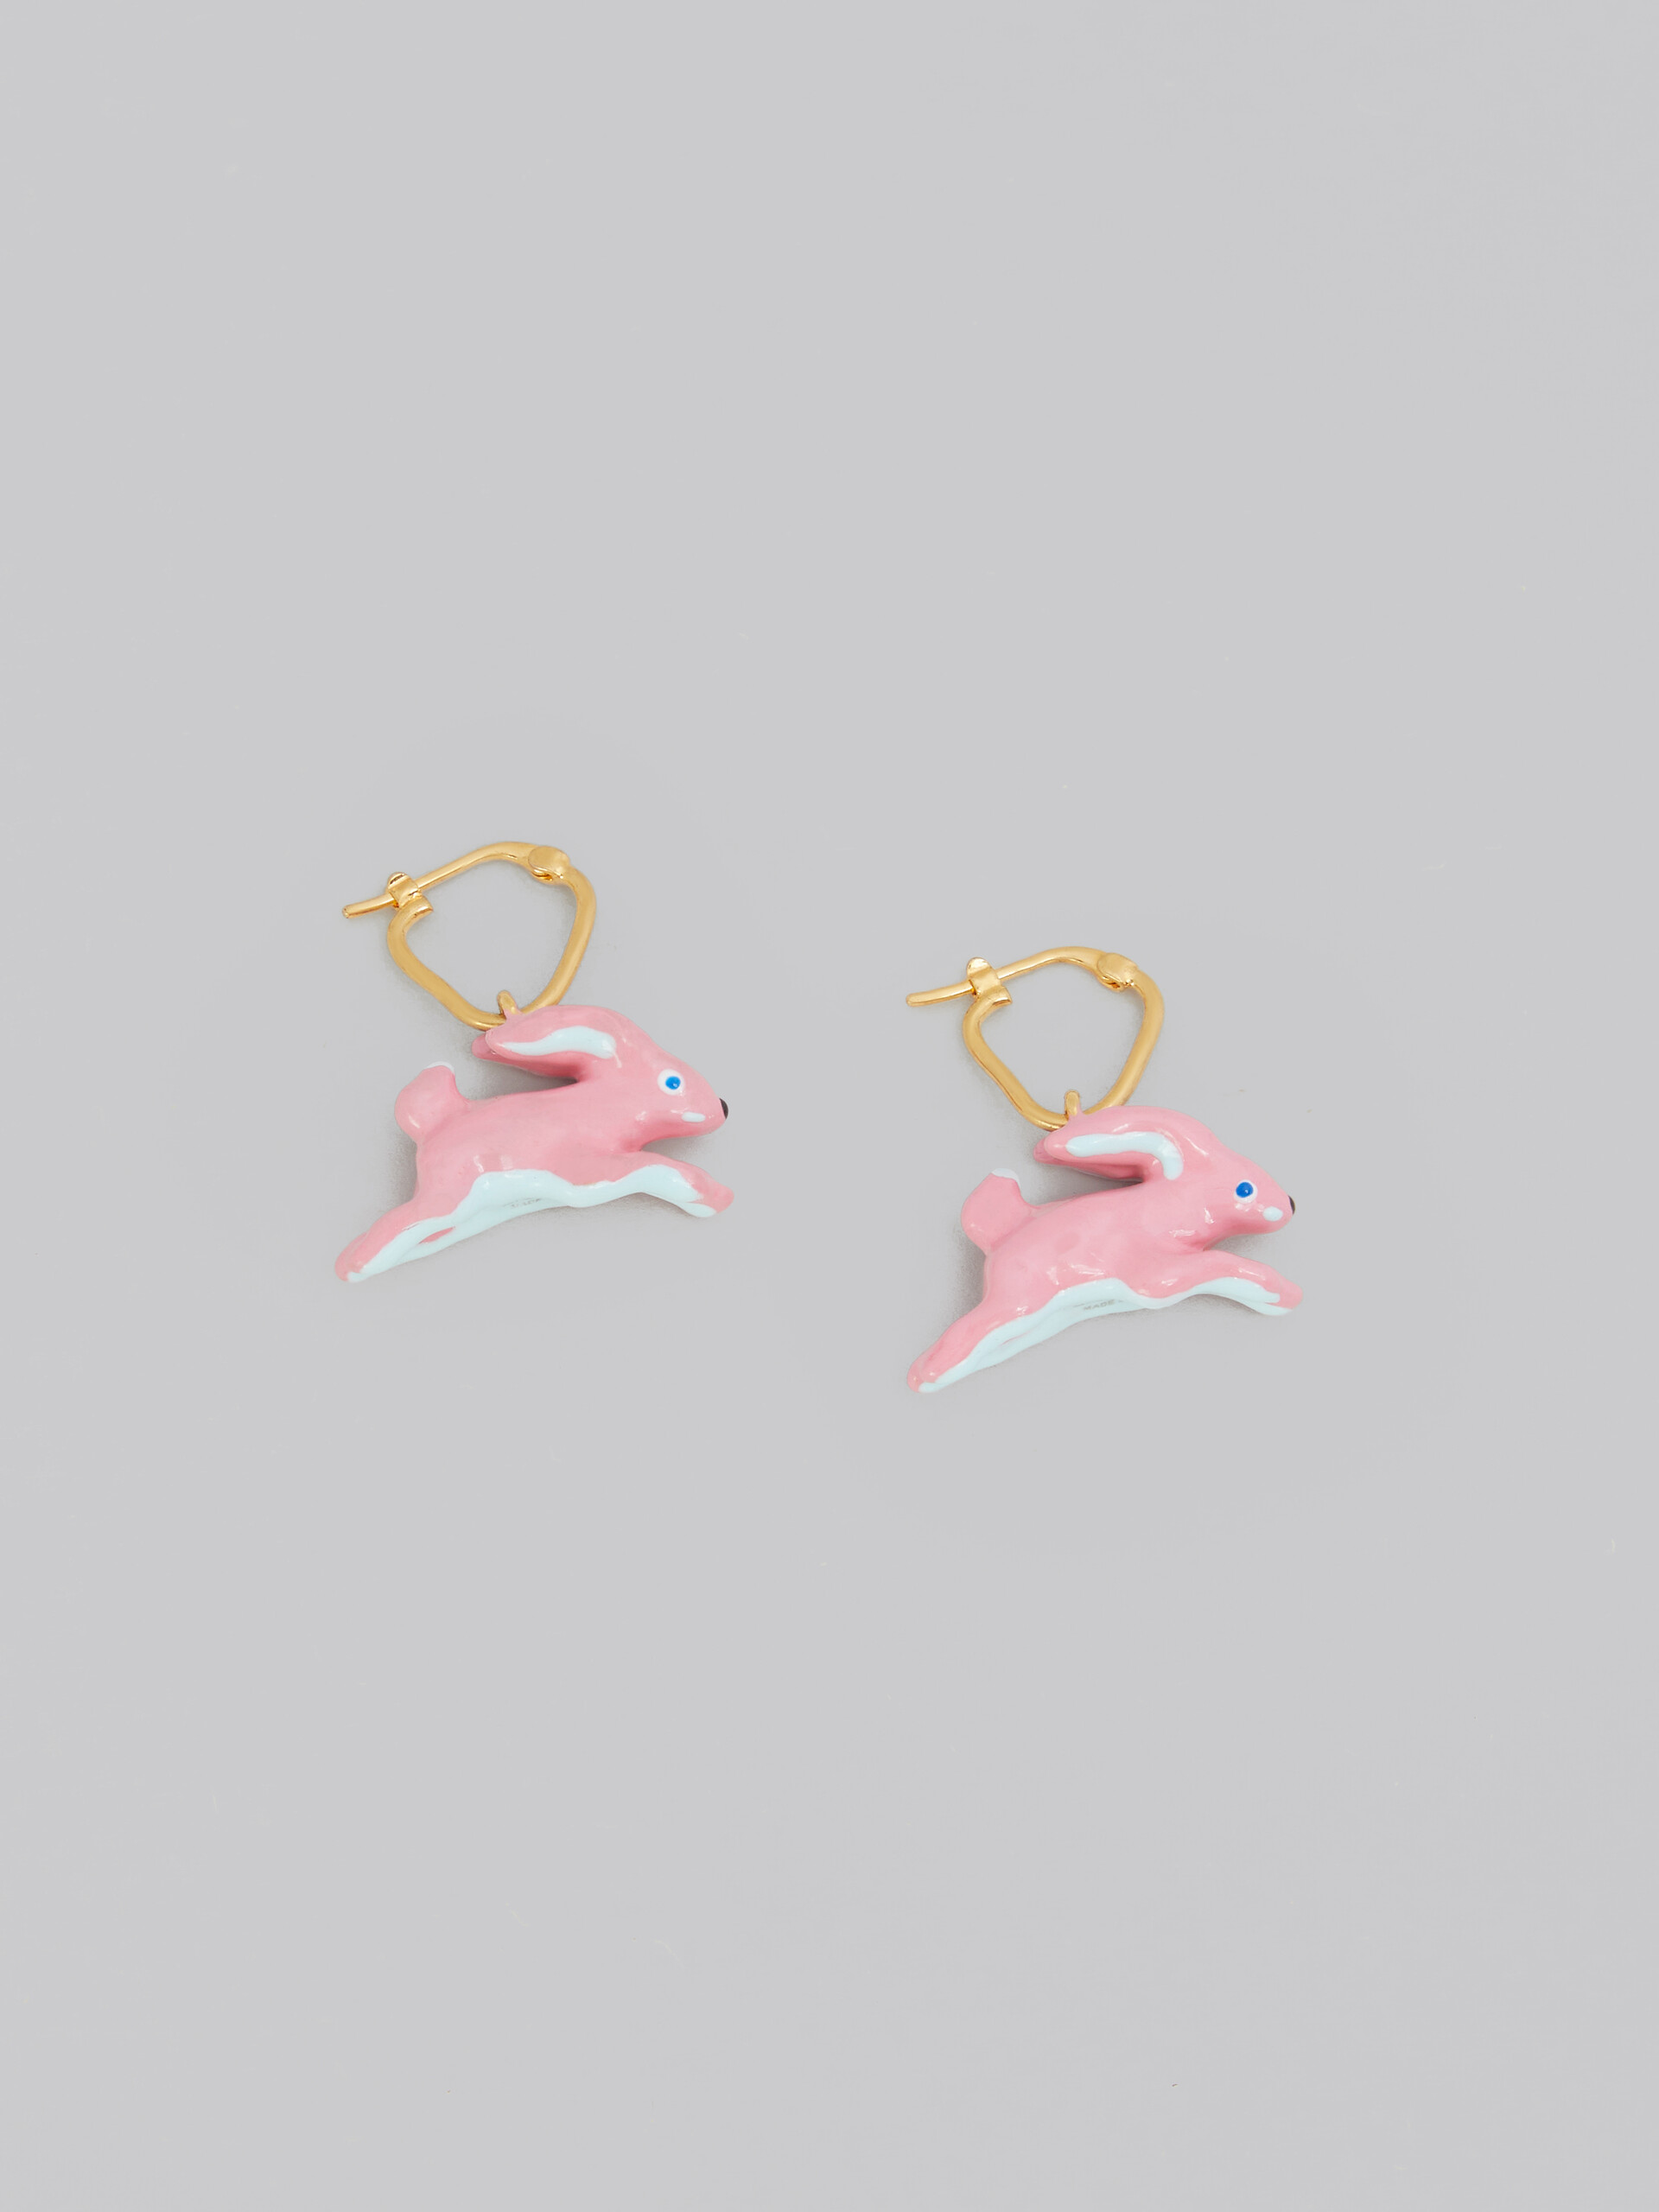 Earrings with rabbit pendant - Earrings - Image 4